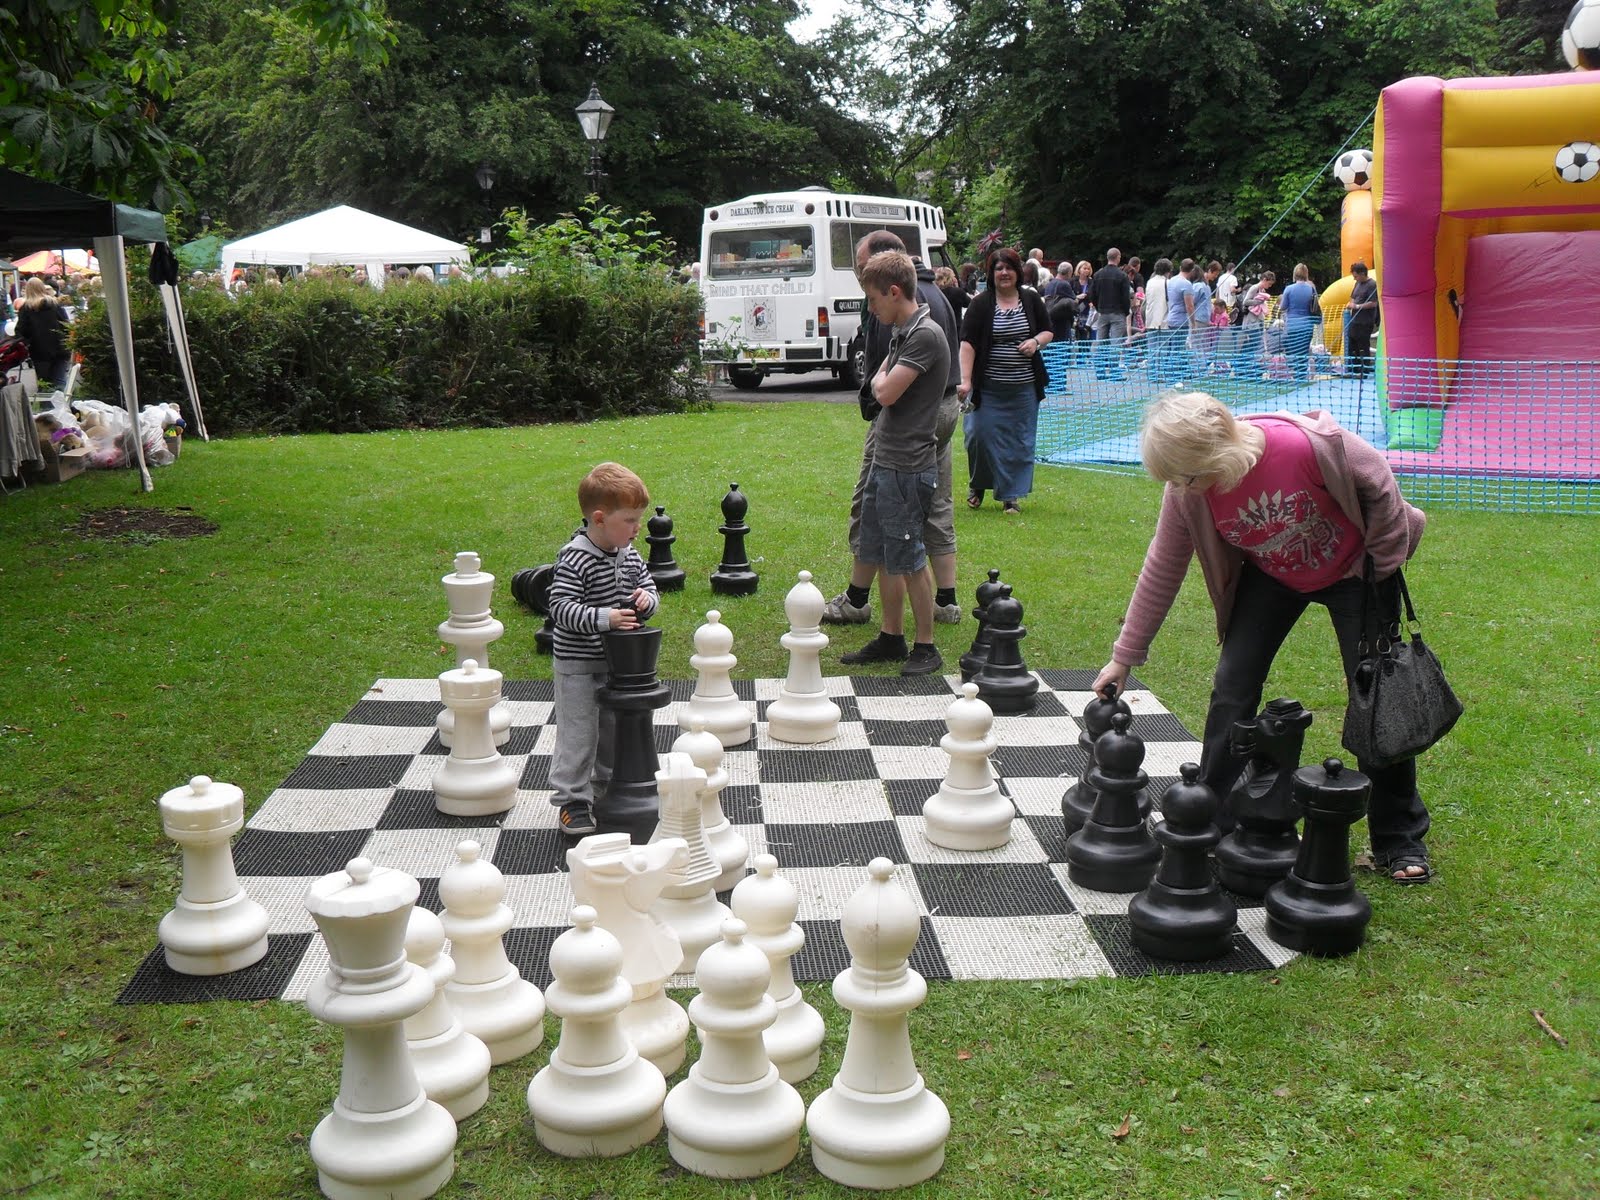 Darlington Chess Club: Darlington Community carnival - Chess tent